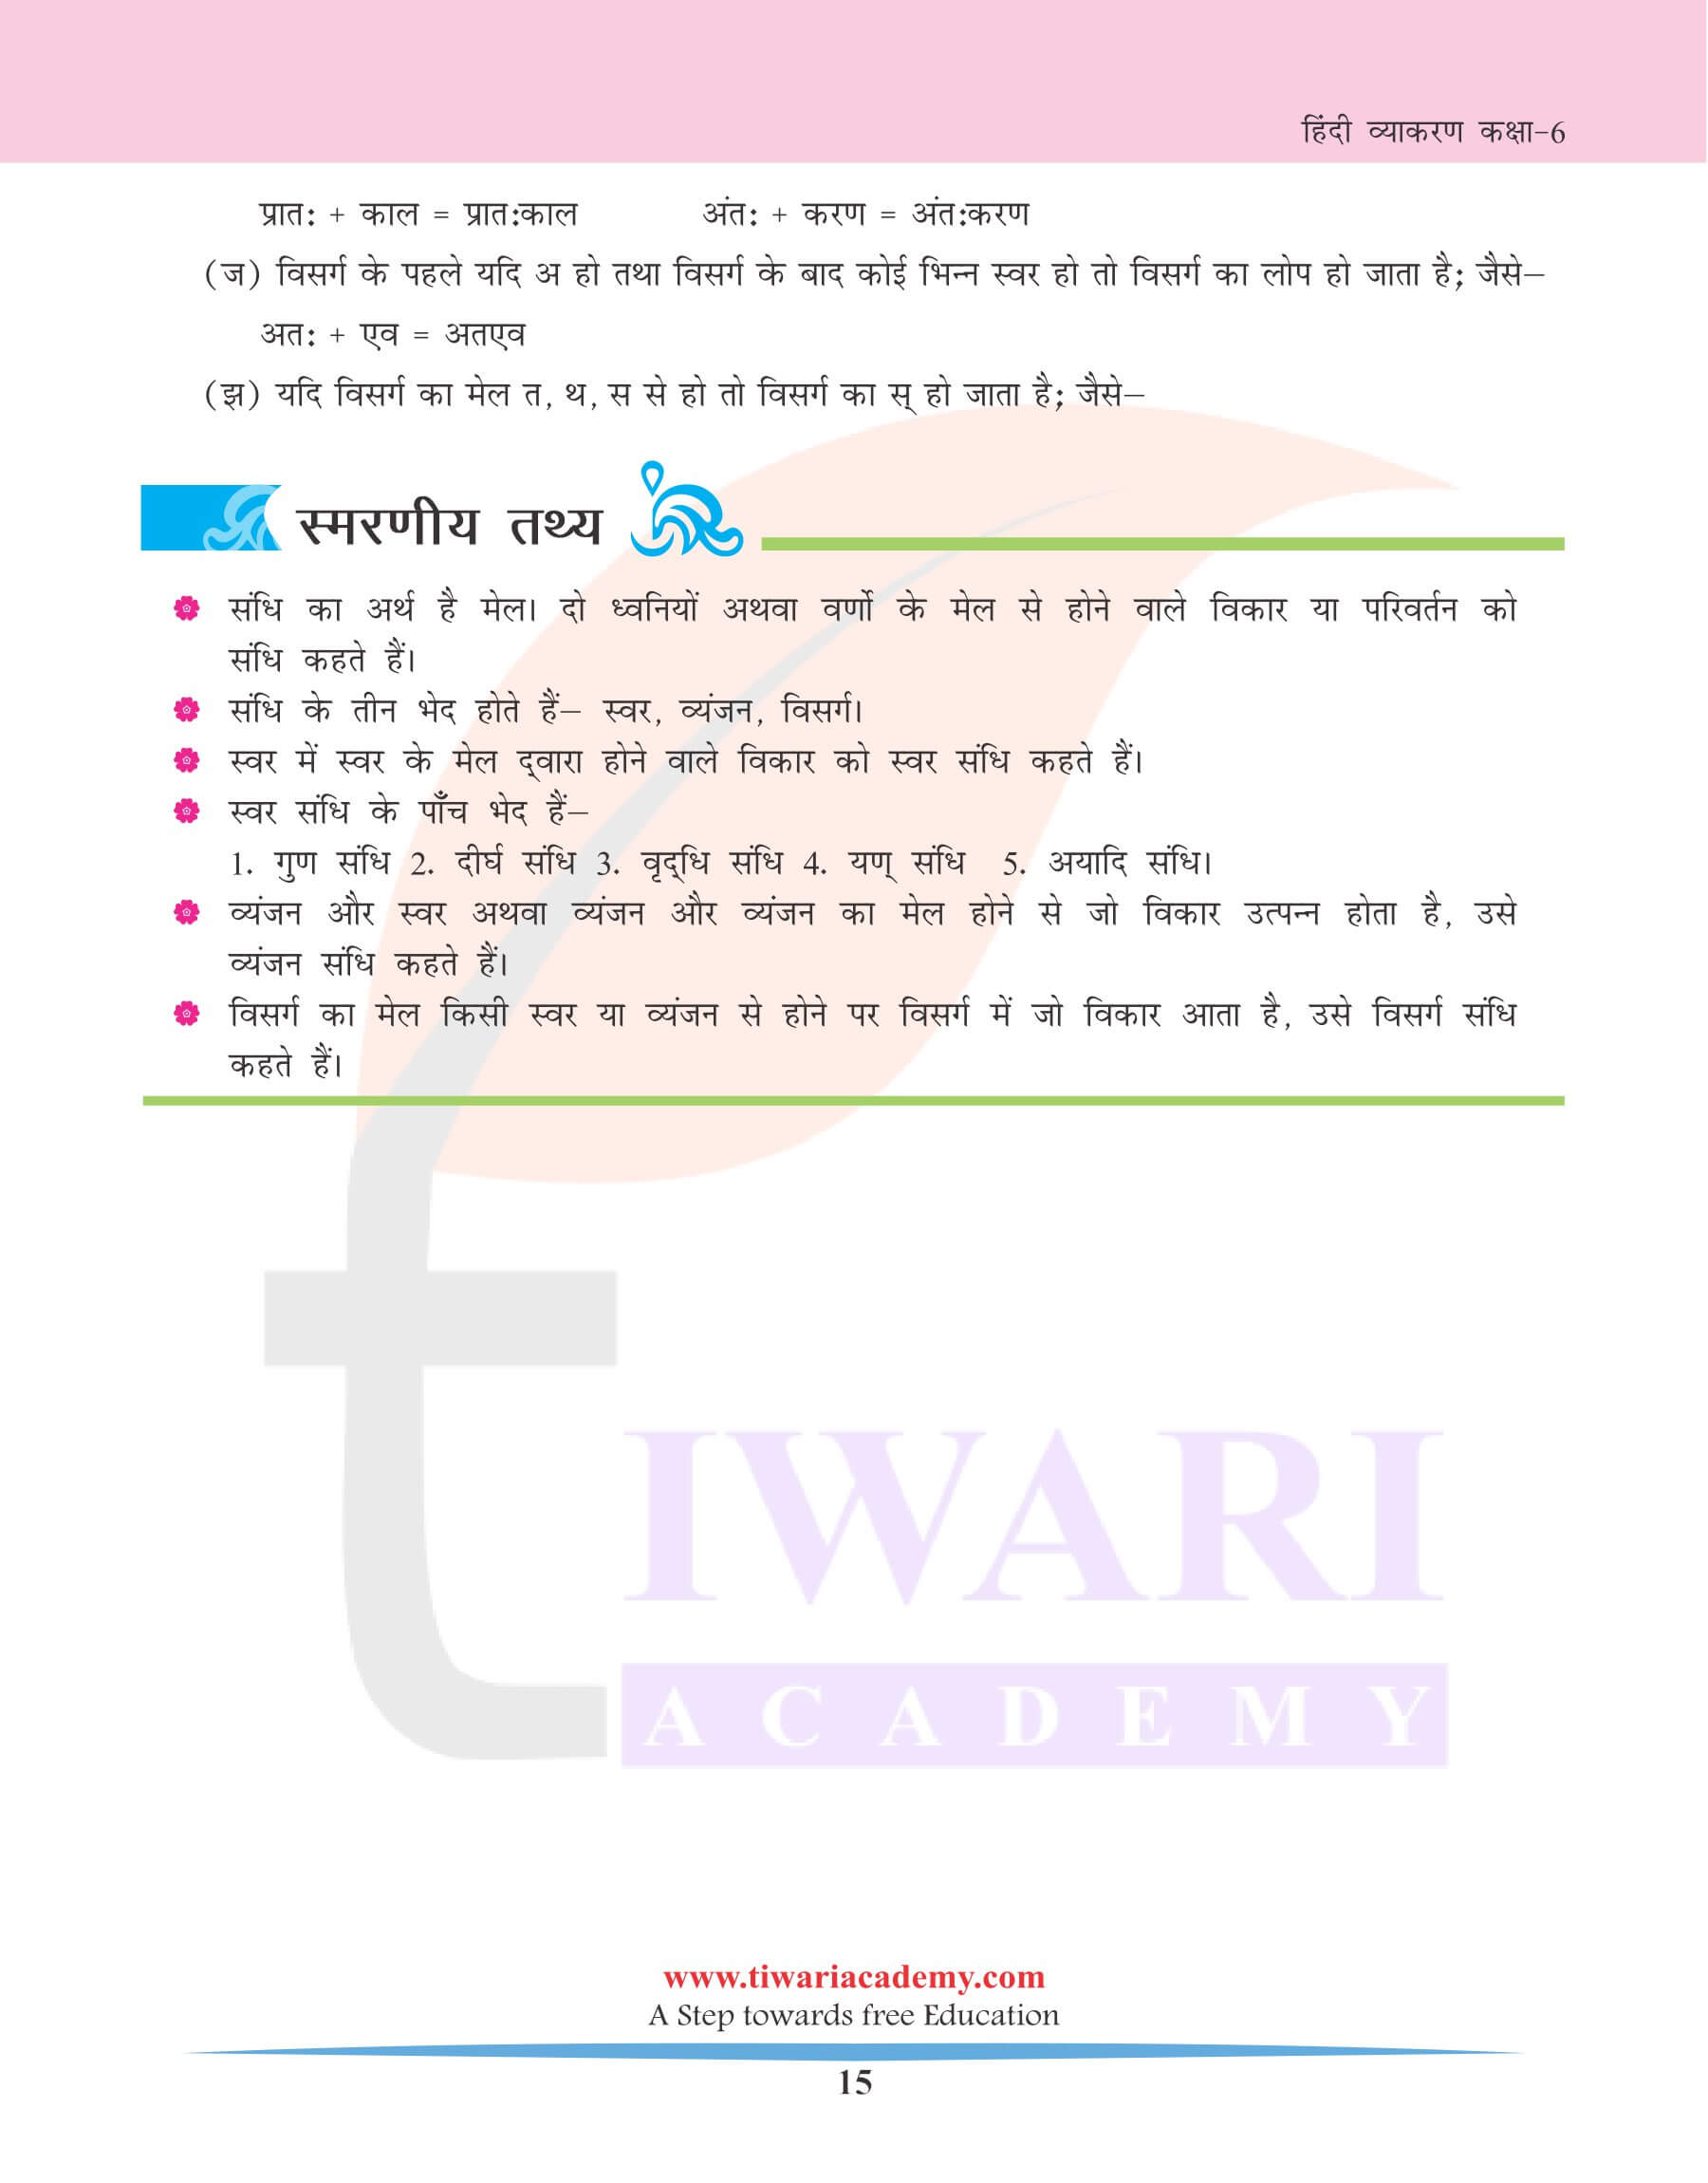 कक्षा 6 हिंदी व्याकरण अध्याय 3 संधि असाइनमेंट्स